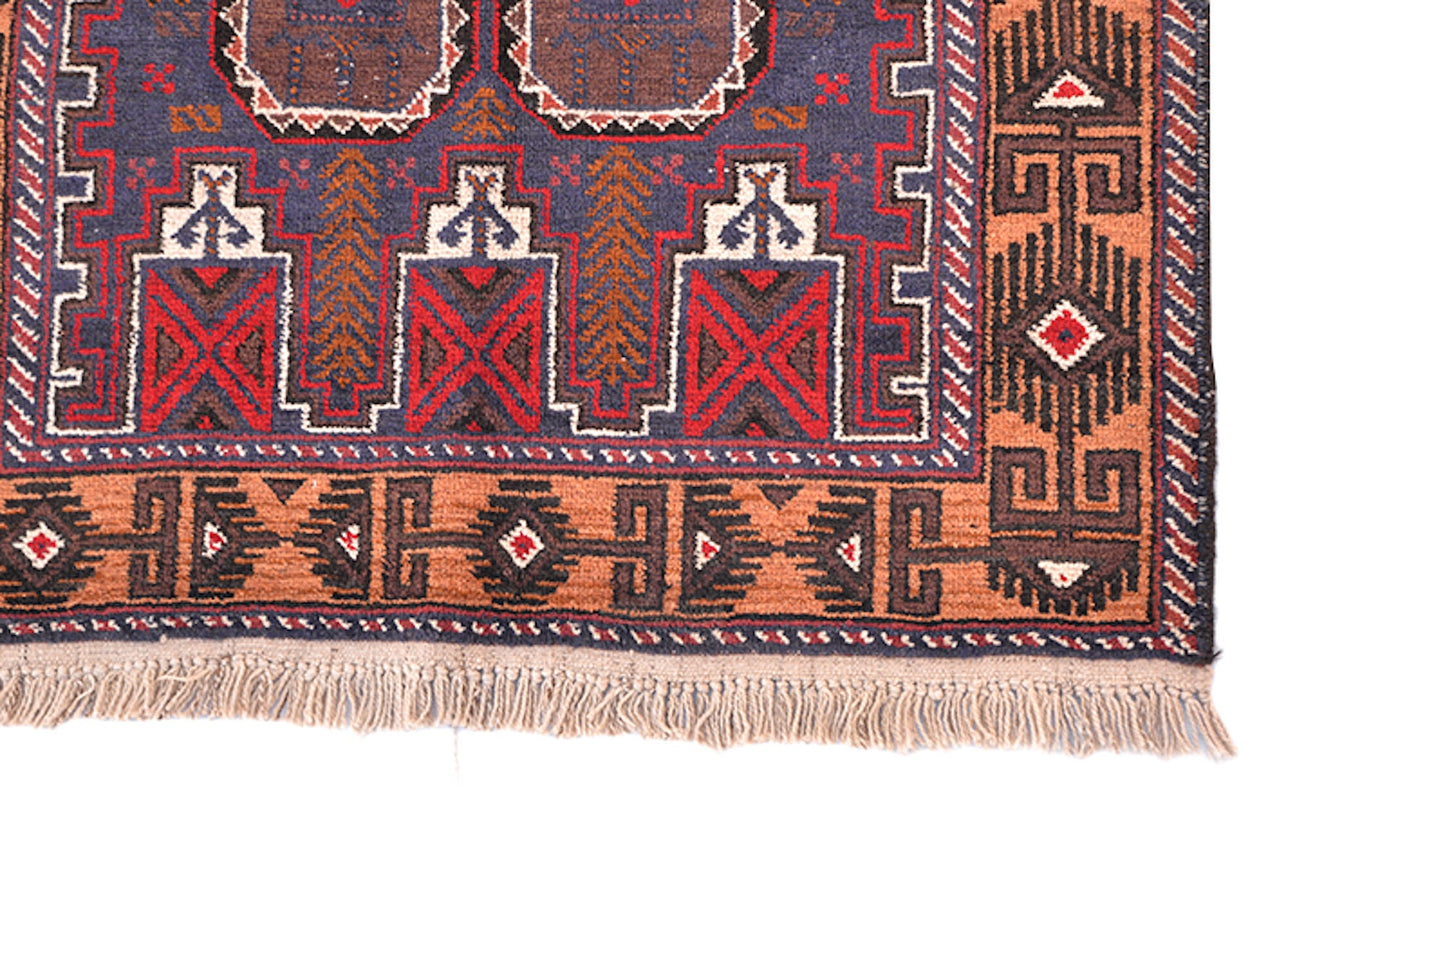 3 x 5 Dark Vintage Rug with Red Navy Geometric Background and Orange Navy Tribal Border | Wool Soft Low Pile Rustic Home Rug